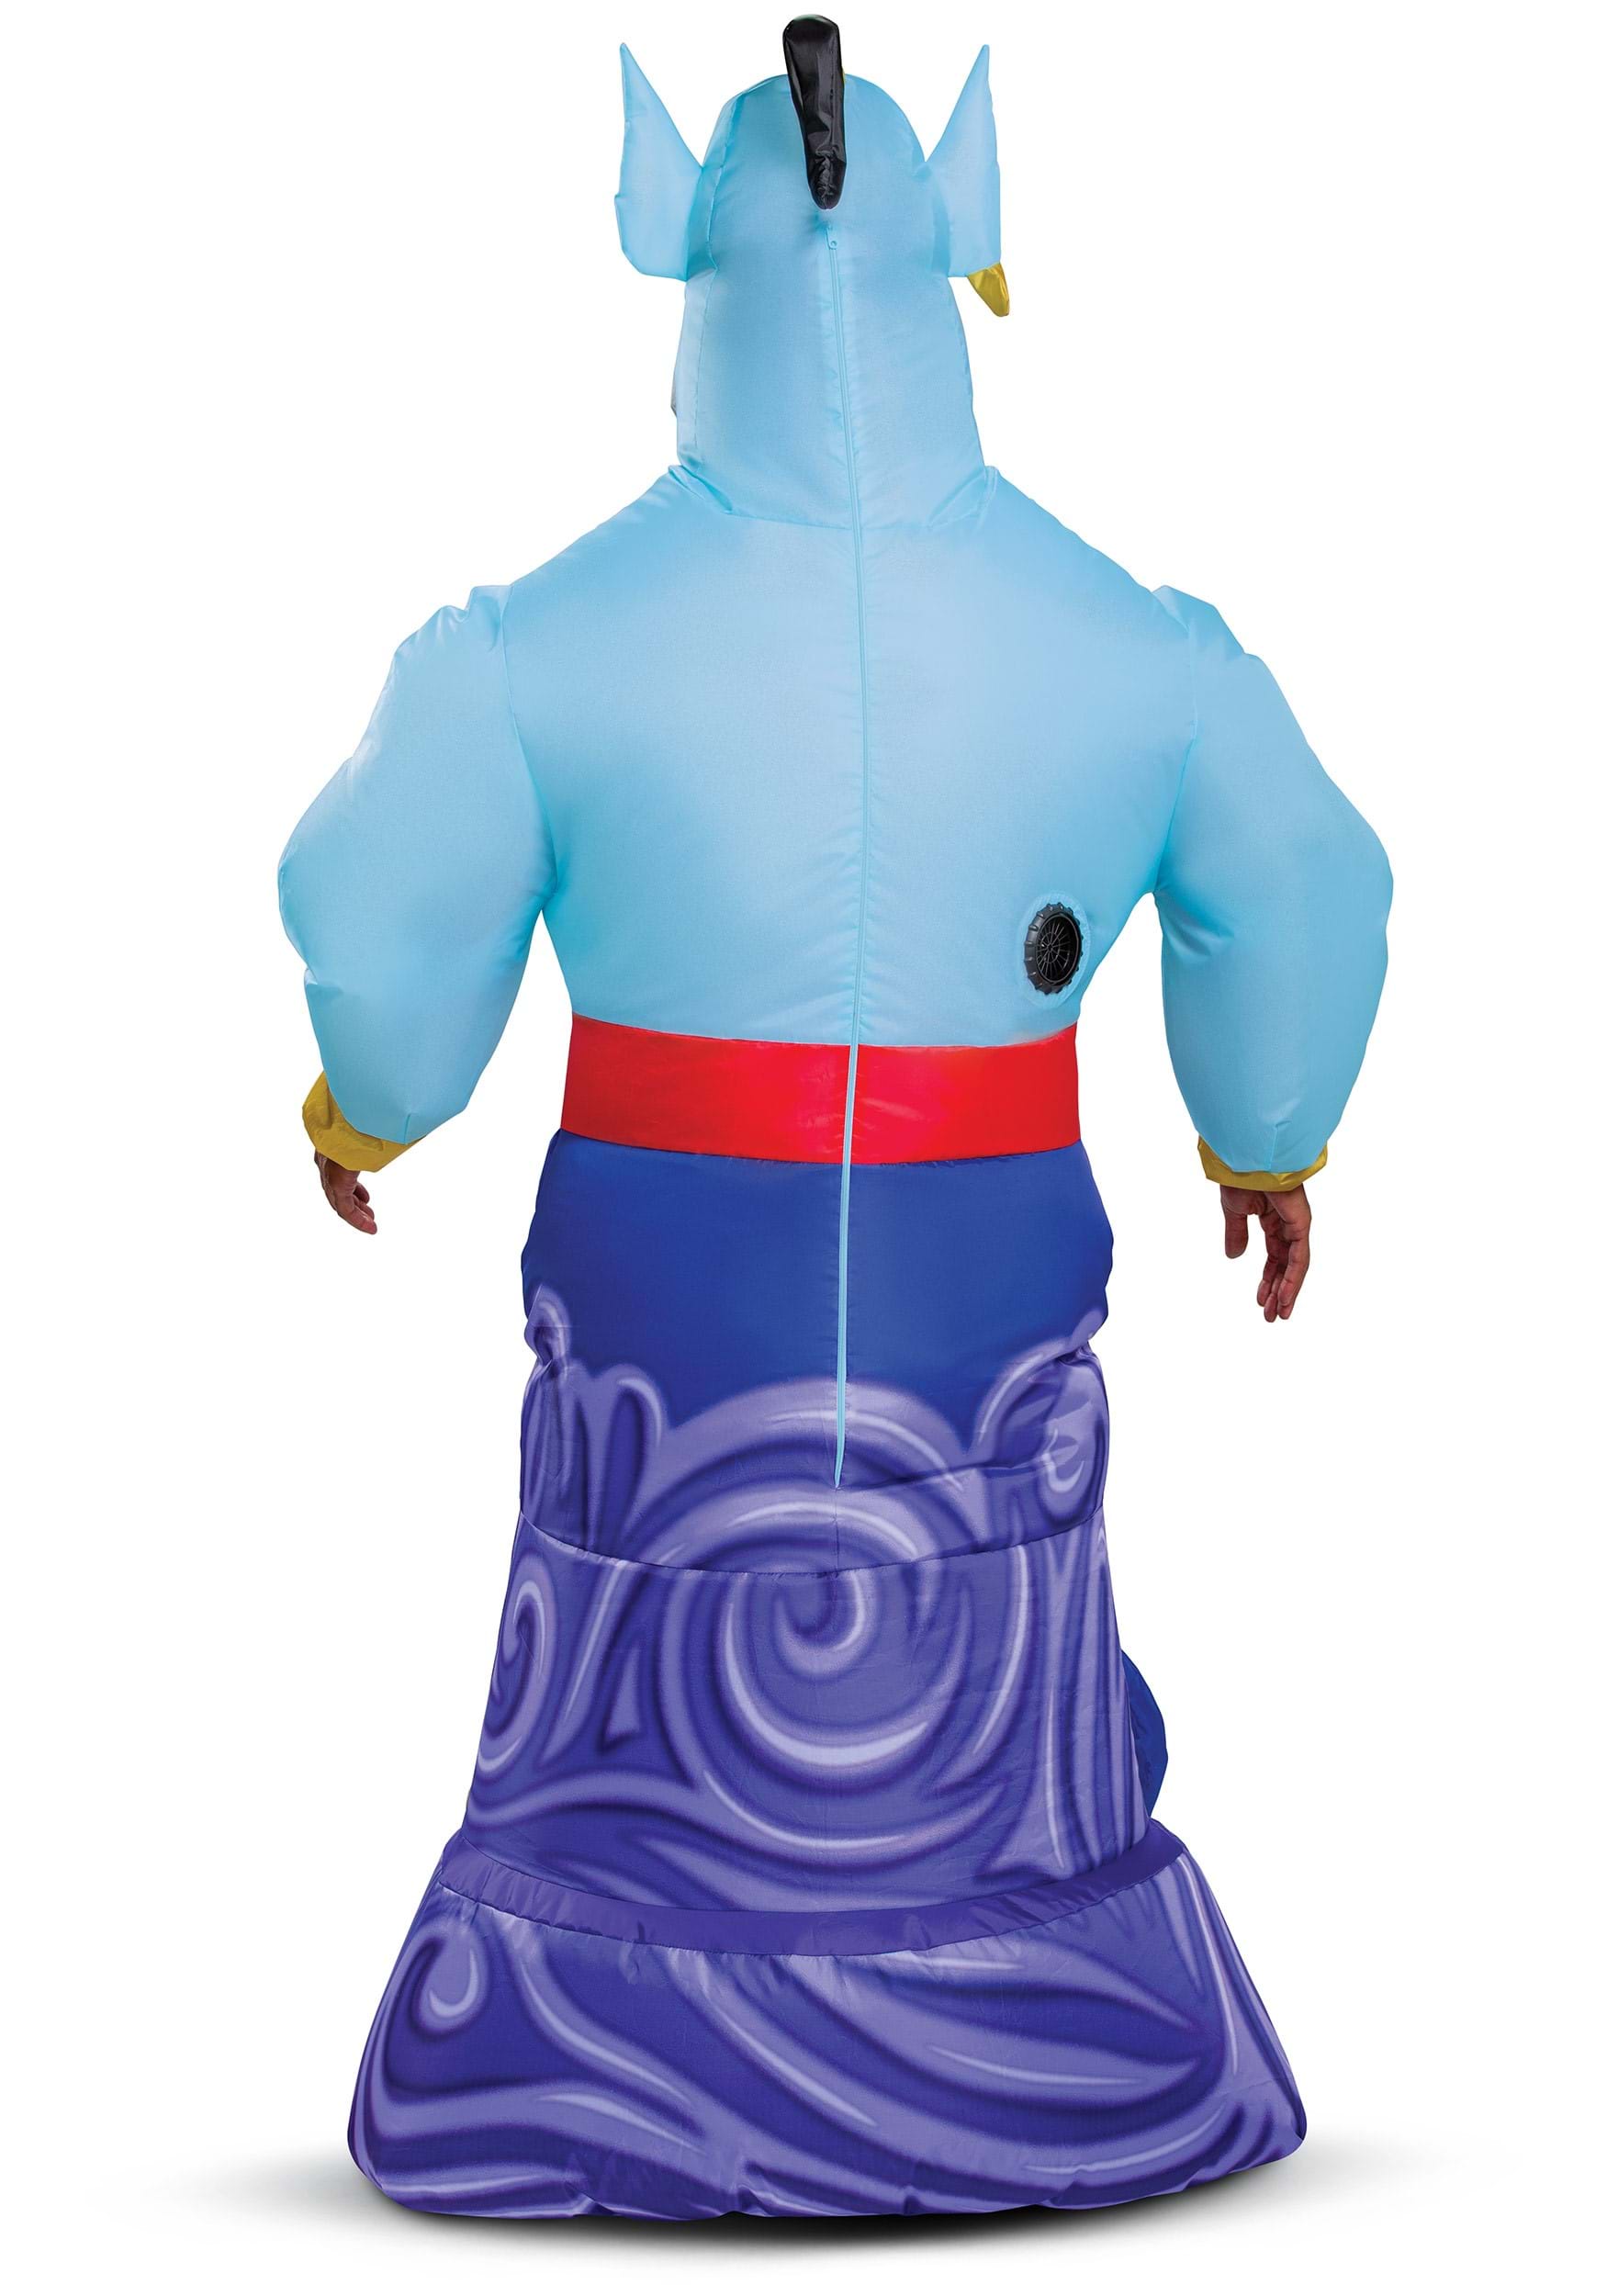 Fantasia inflável de gênio adulto de Aladdin - Aladdin (Animated) Adult  Genie Inflatable Costume